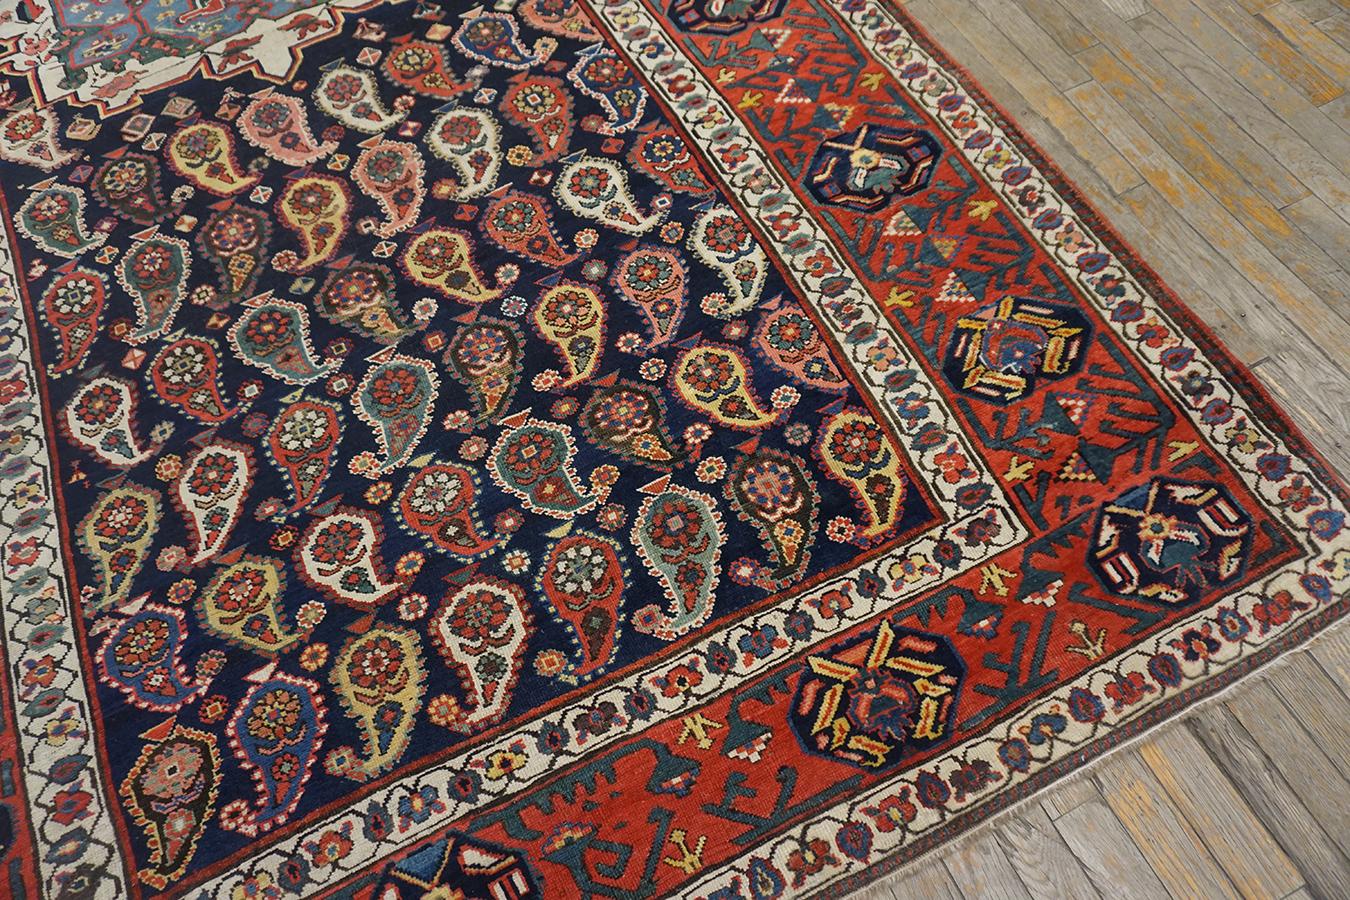 Antique Early 19th Century Caucasian Karabagh Carpet, Size: 6'x 12' 